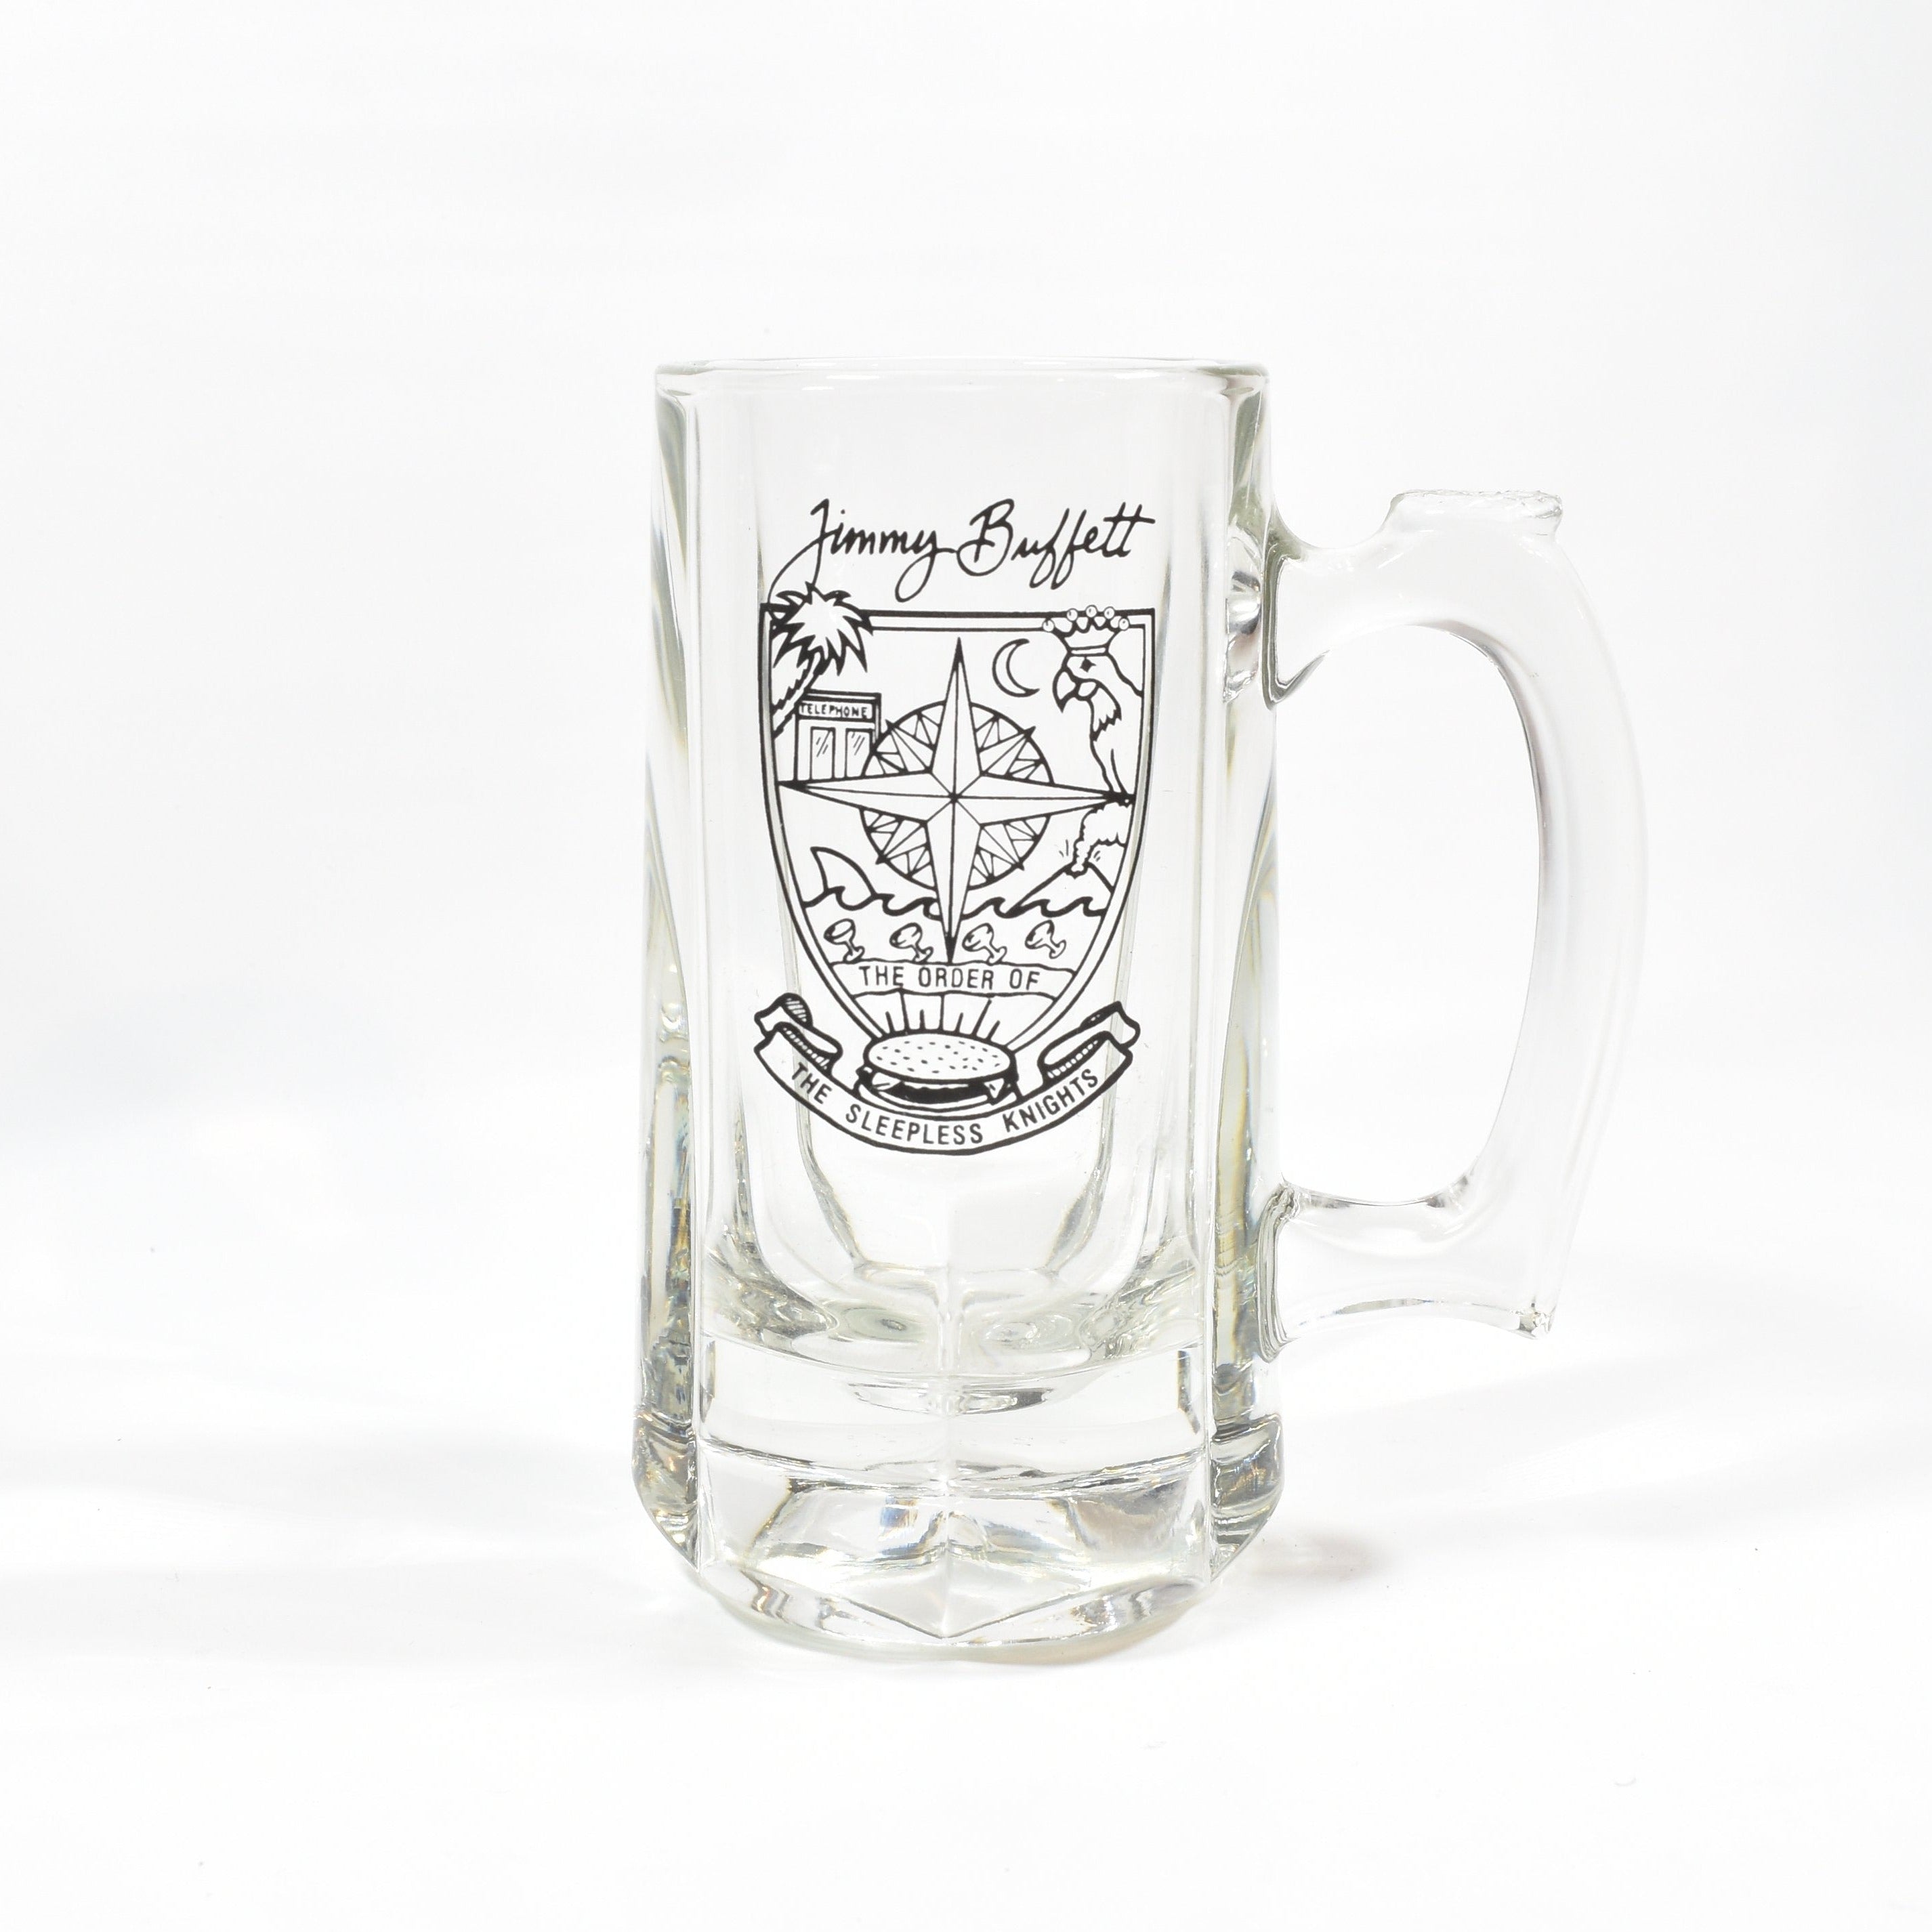 Jimmy Buffets The order of the sleeping Knights Glass Mug Beer mug used 6 inch